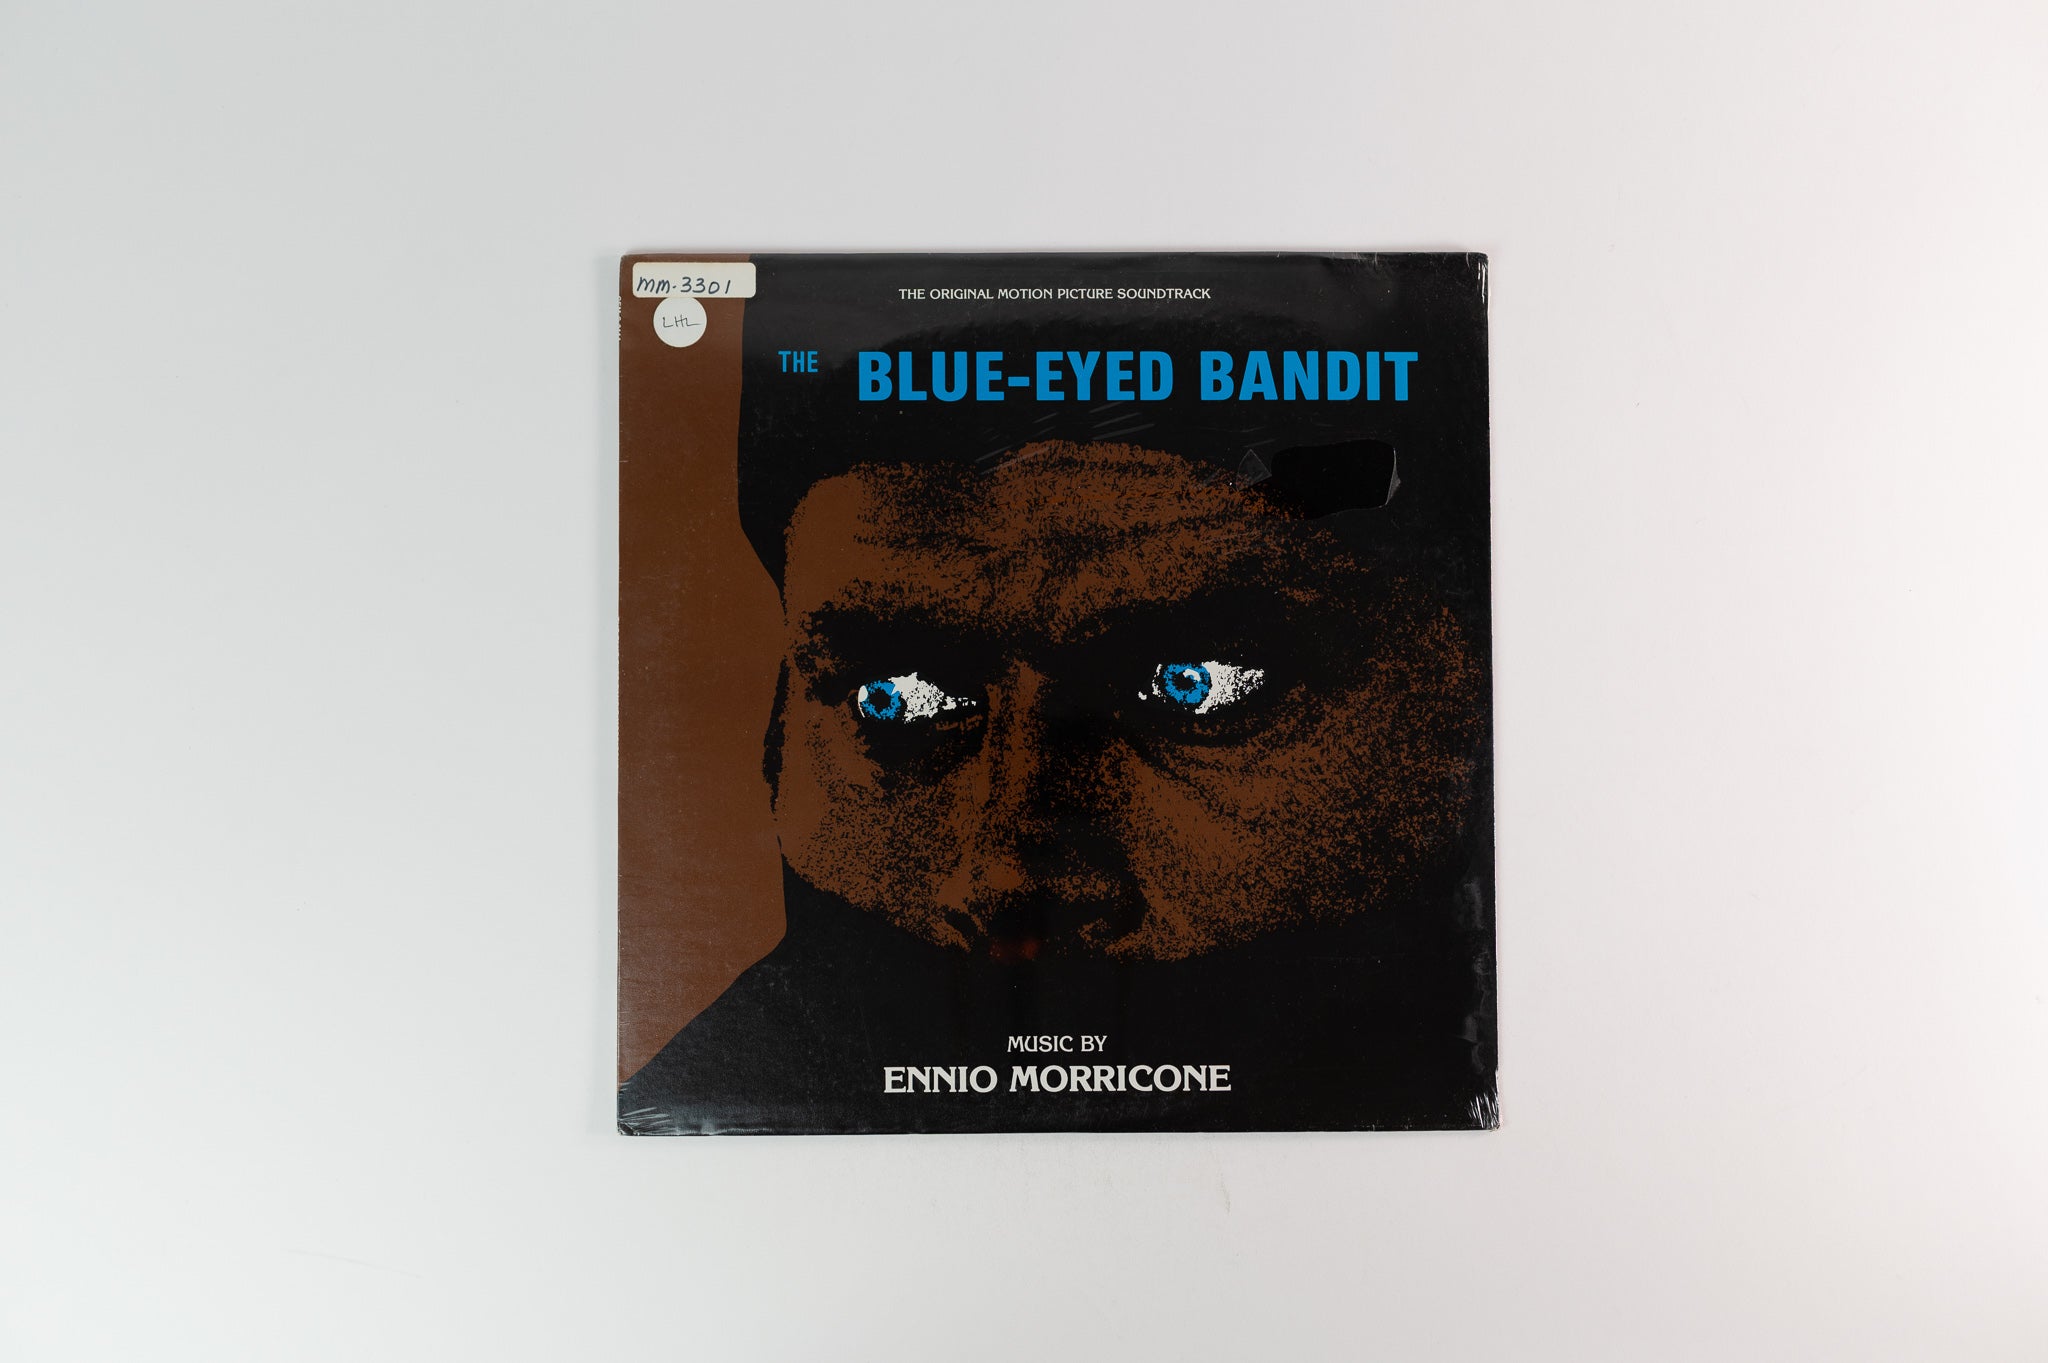 Ennio Morricone - The Blue-Eyed Bandit (Original Motion Picture Soundtrack) on Cerberus Sealed